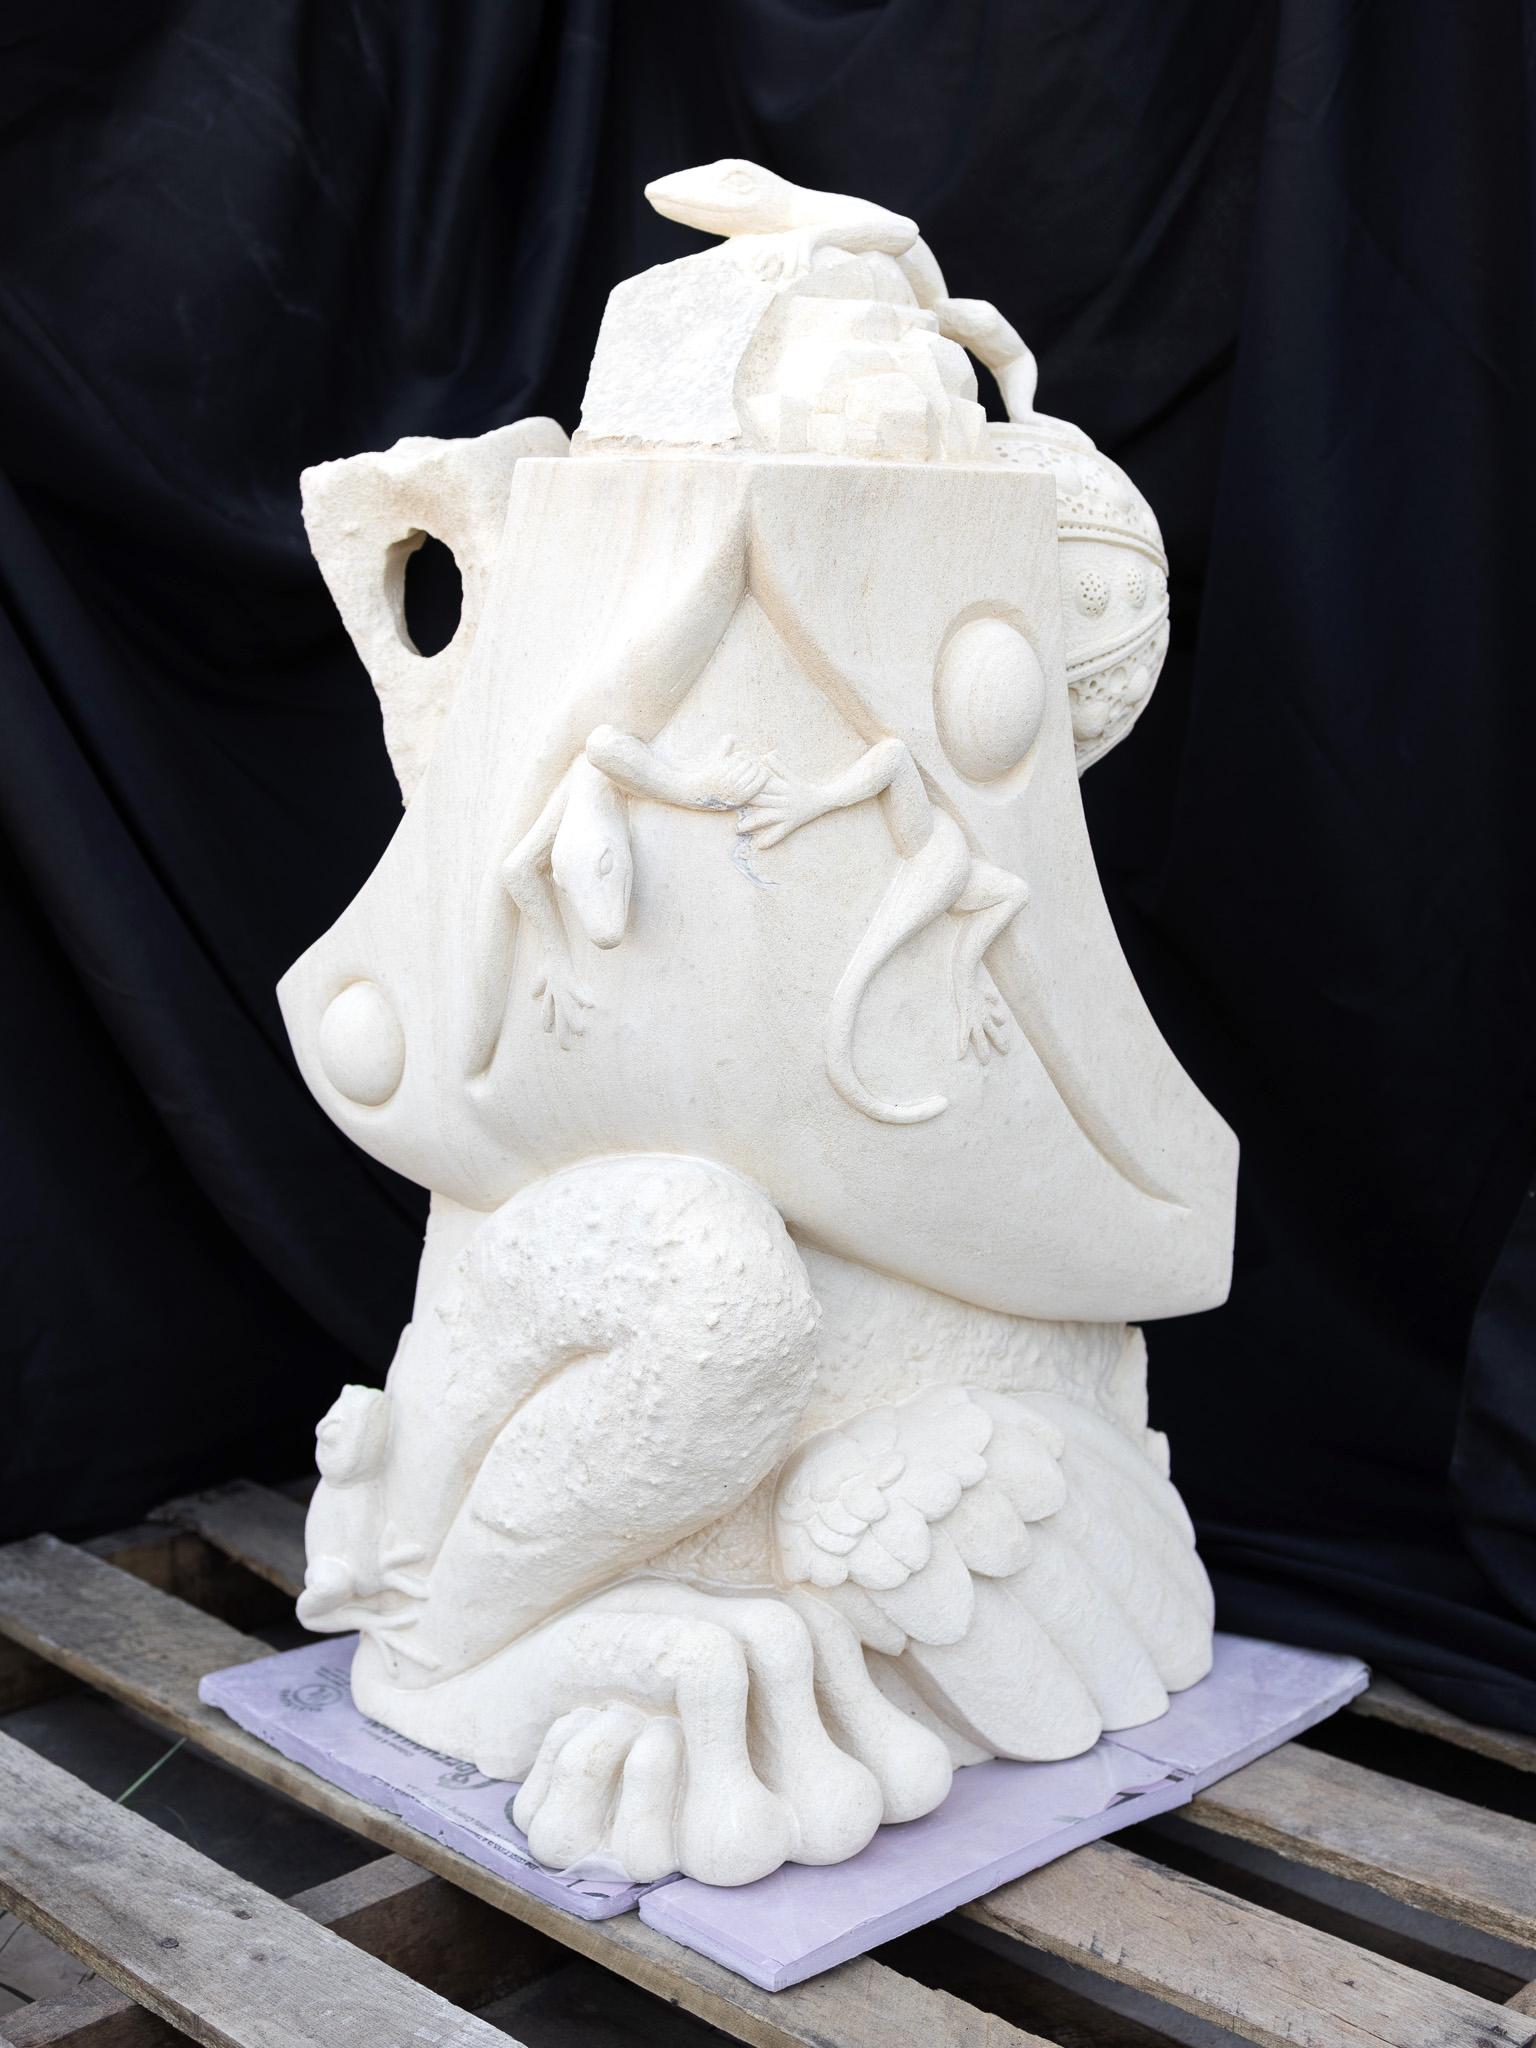 Bob Ragan Figurative Sculpture - "Frog Bird" Fantastical Psychedelic Sculpture White Limestone Stone Carving